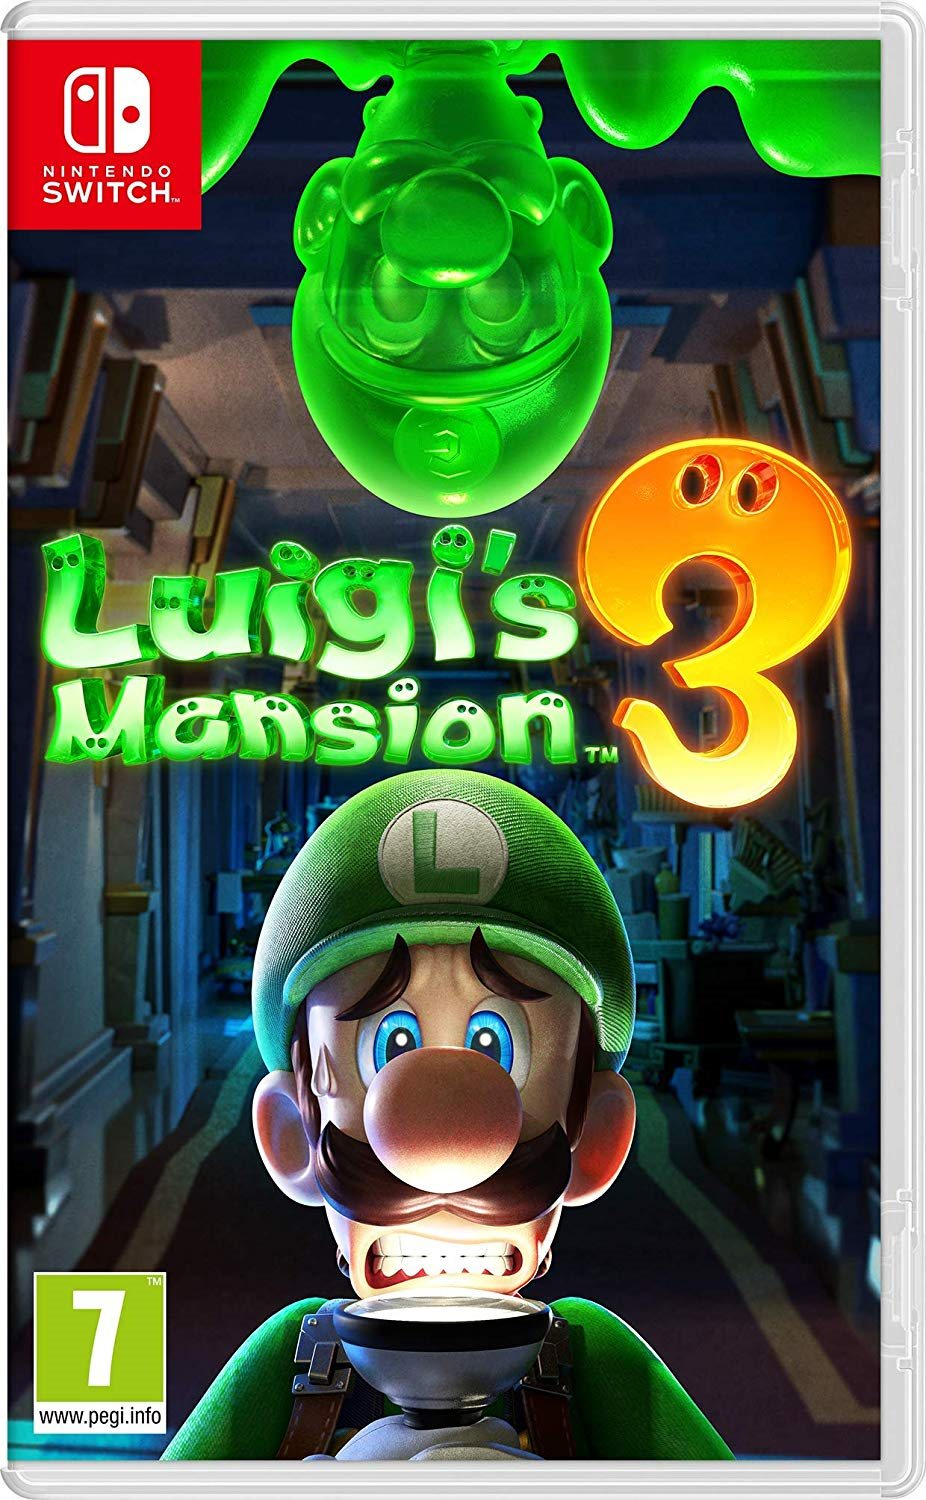 Konzol játék Luigis Mansion 3 - Nintendo Switch